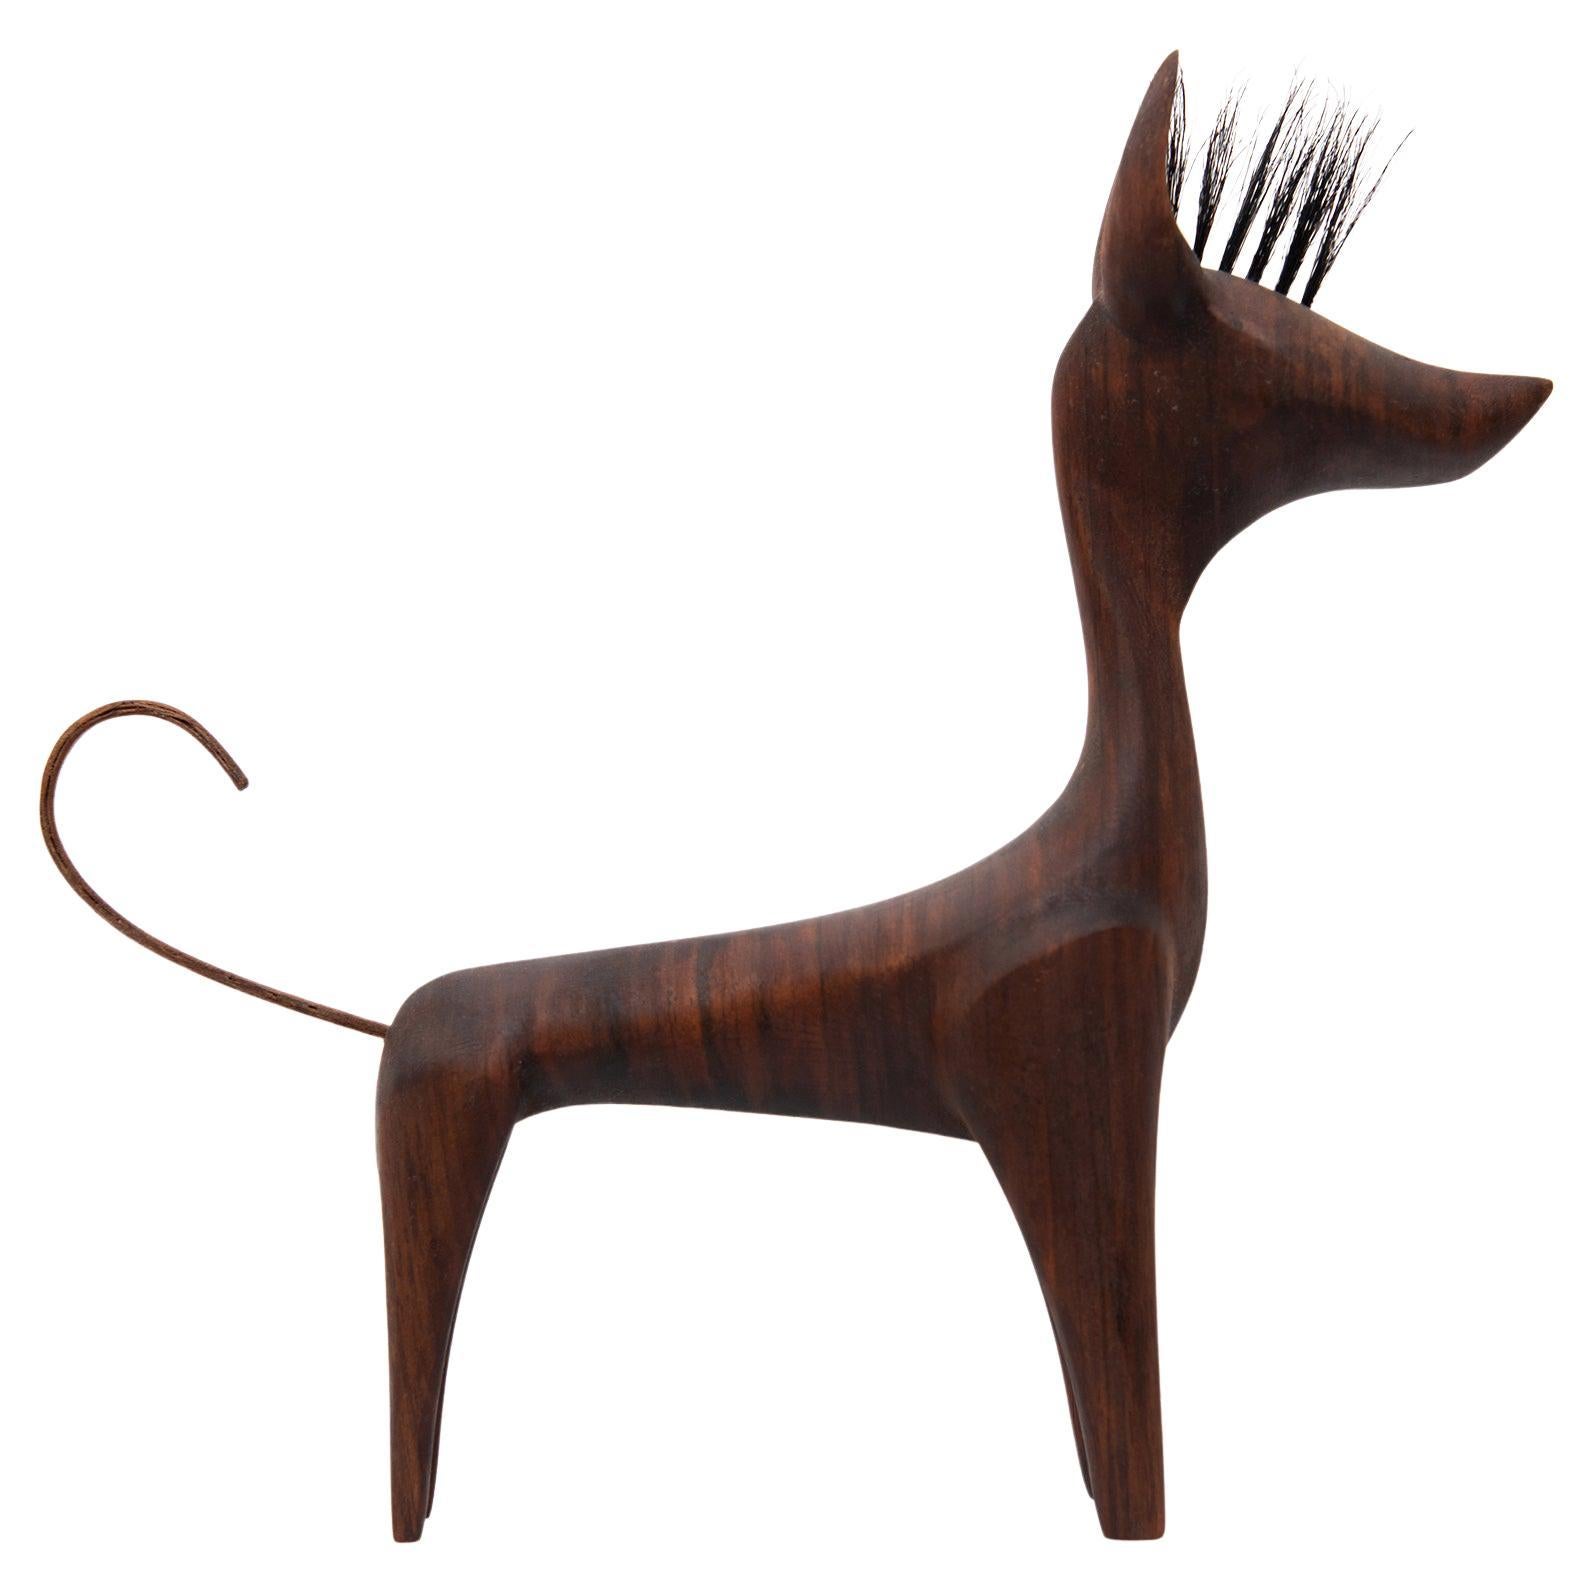 Lolo by Design VA . Xoloitzcuintle Wood Sculpture For Sale